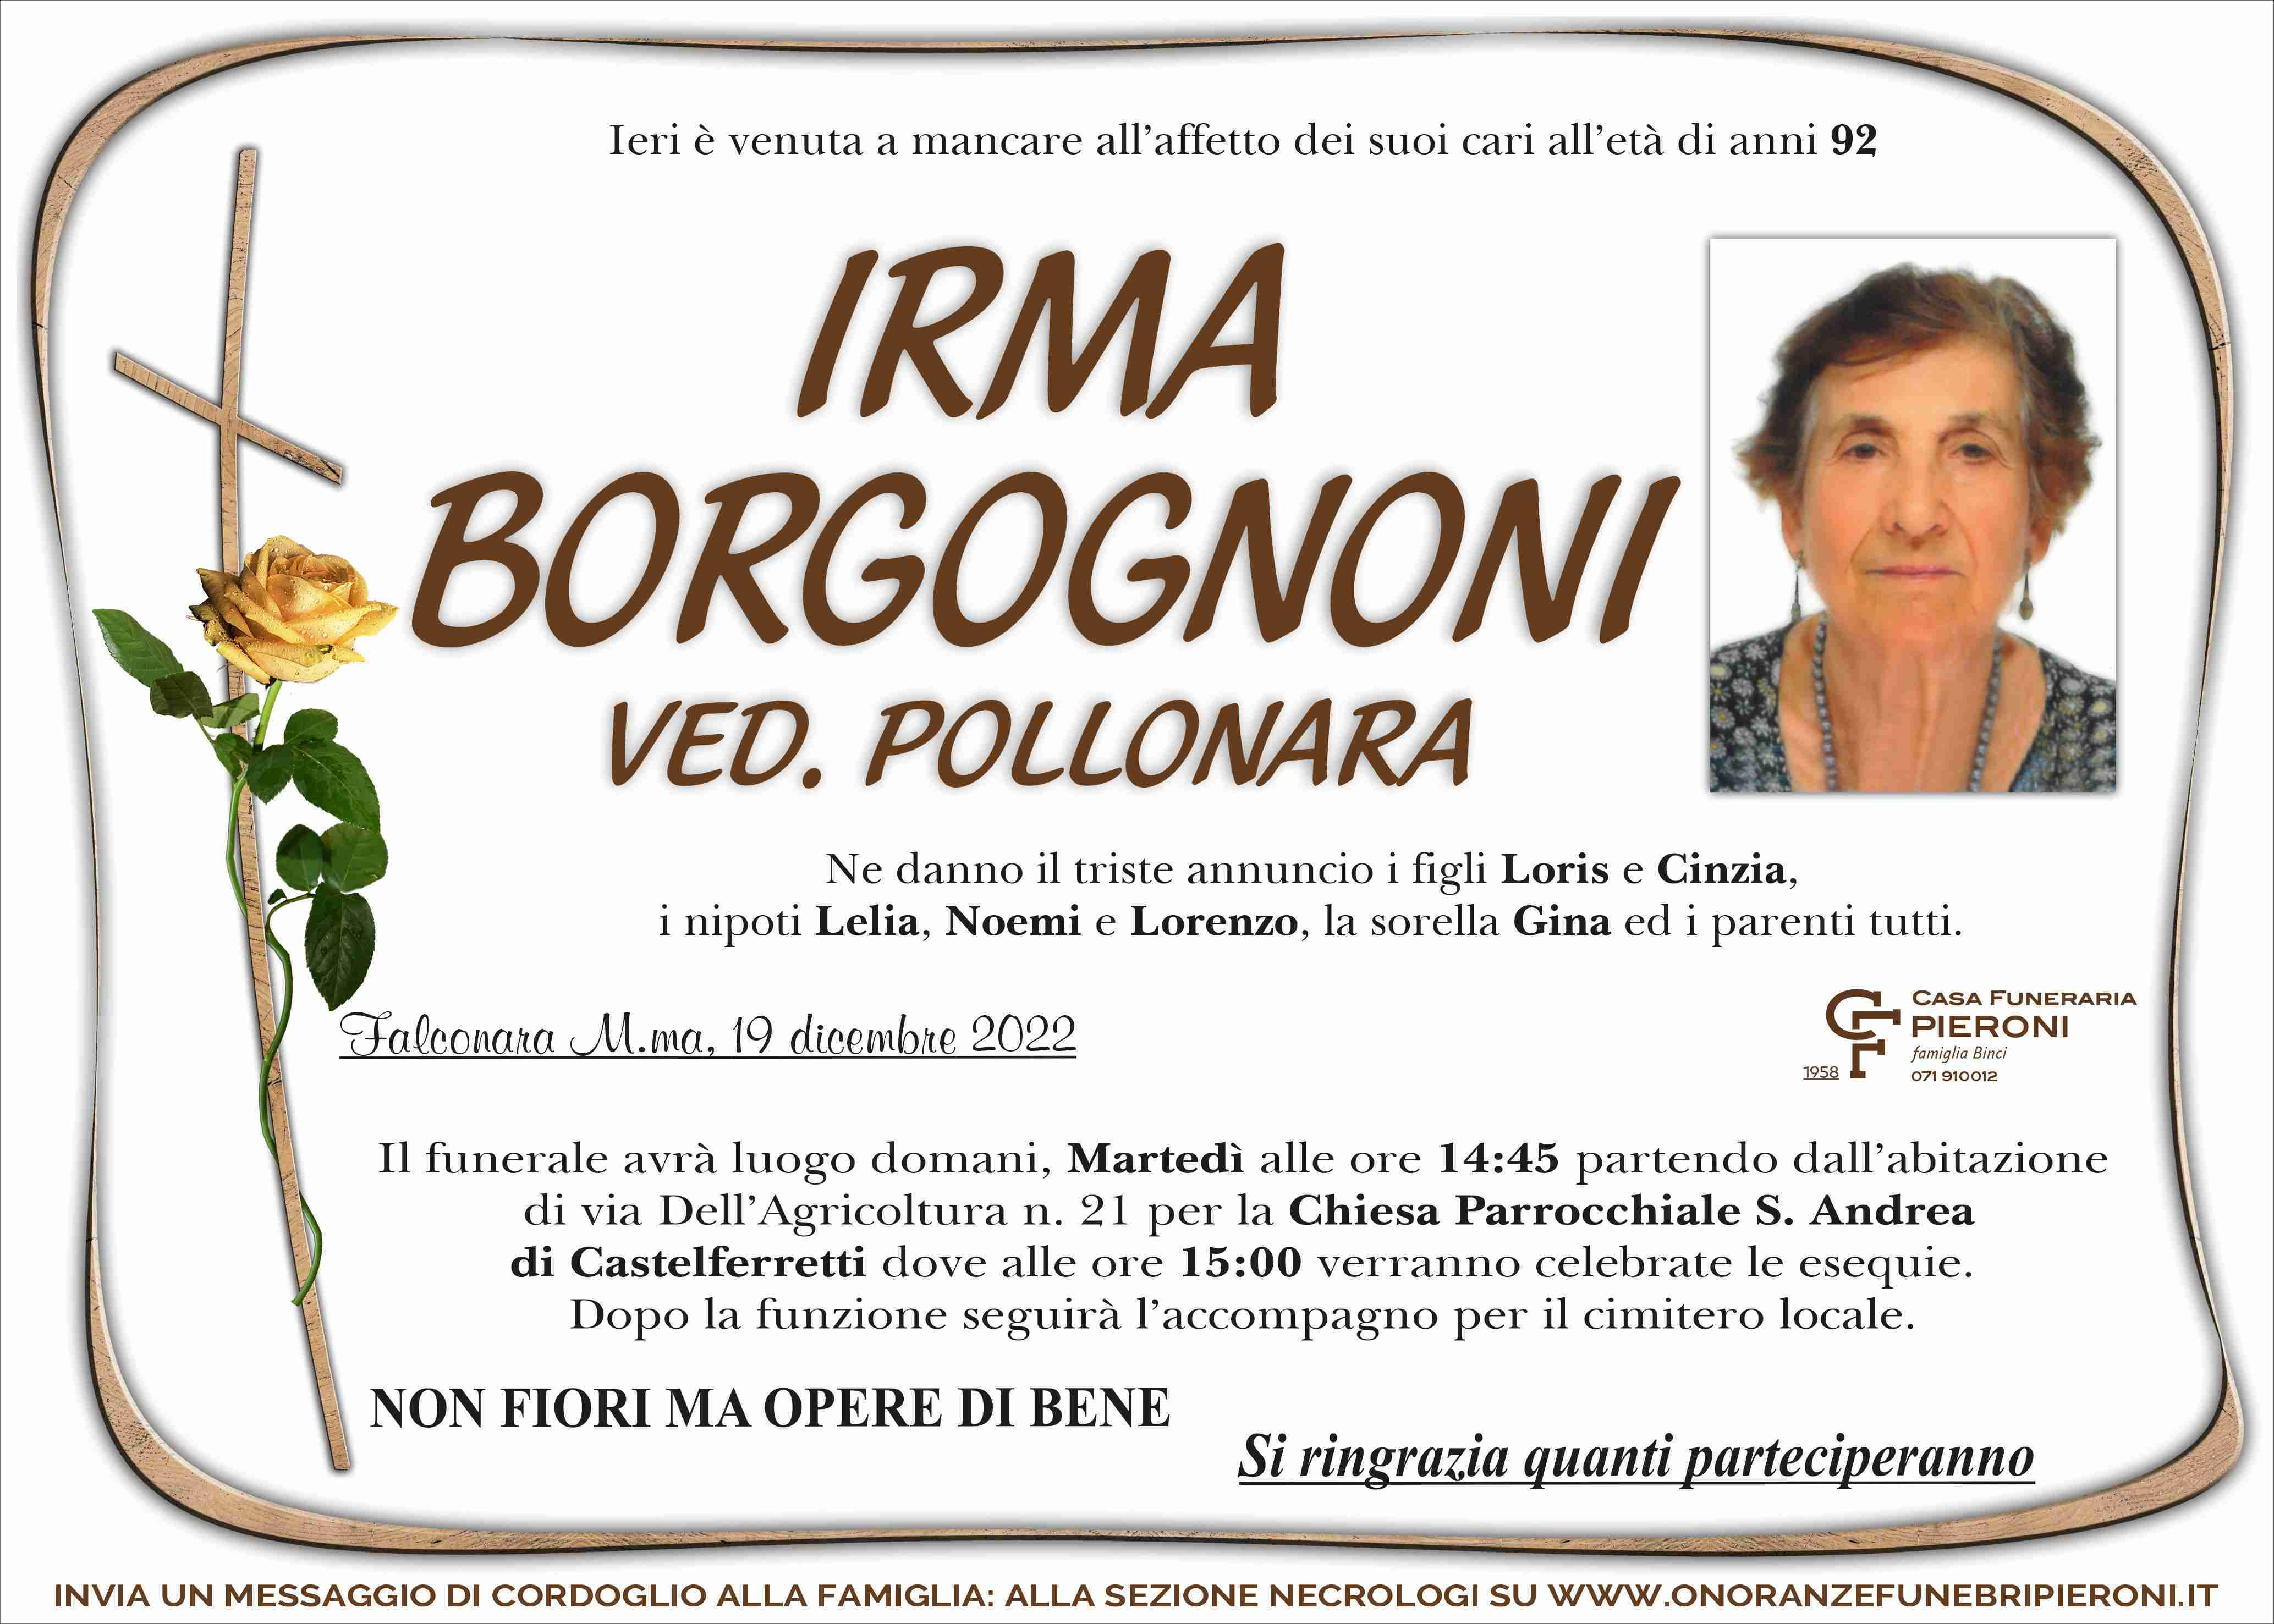 Irma Borgognoni